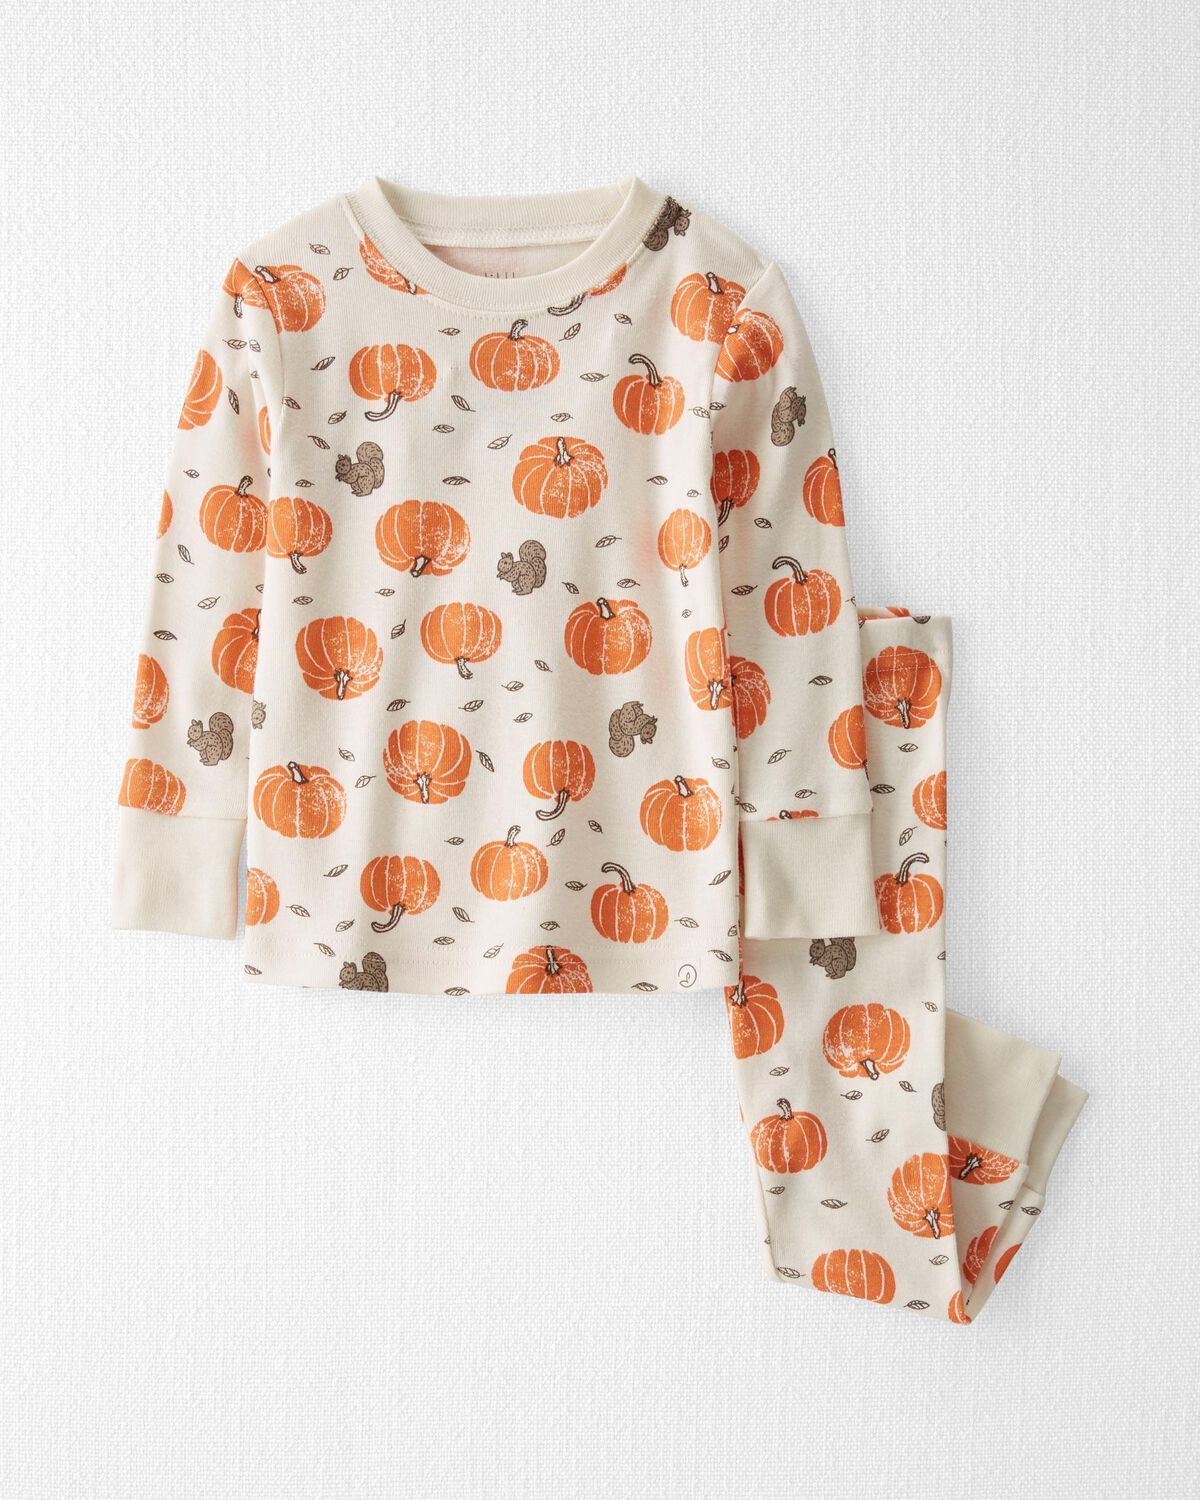 Harvest Pumpkins On Sweet Cream Baby Organic Cotton Pajamas Set | carters.com | Carter's